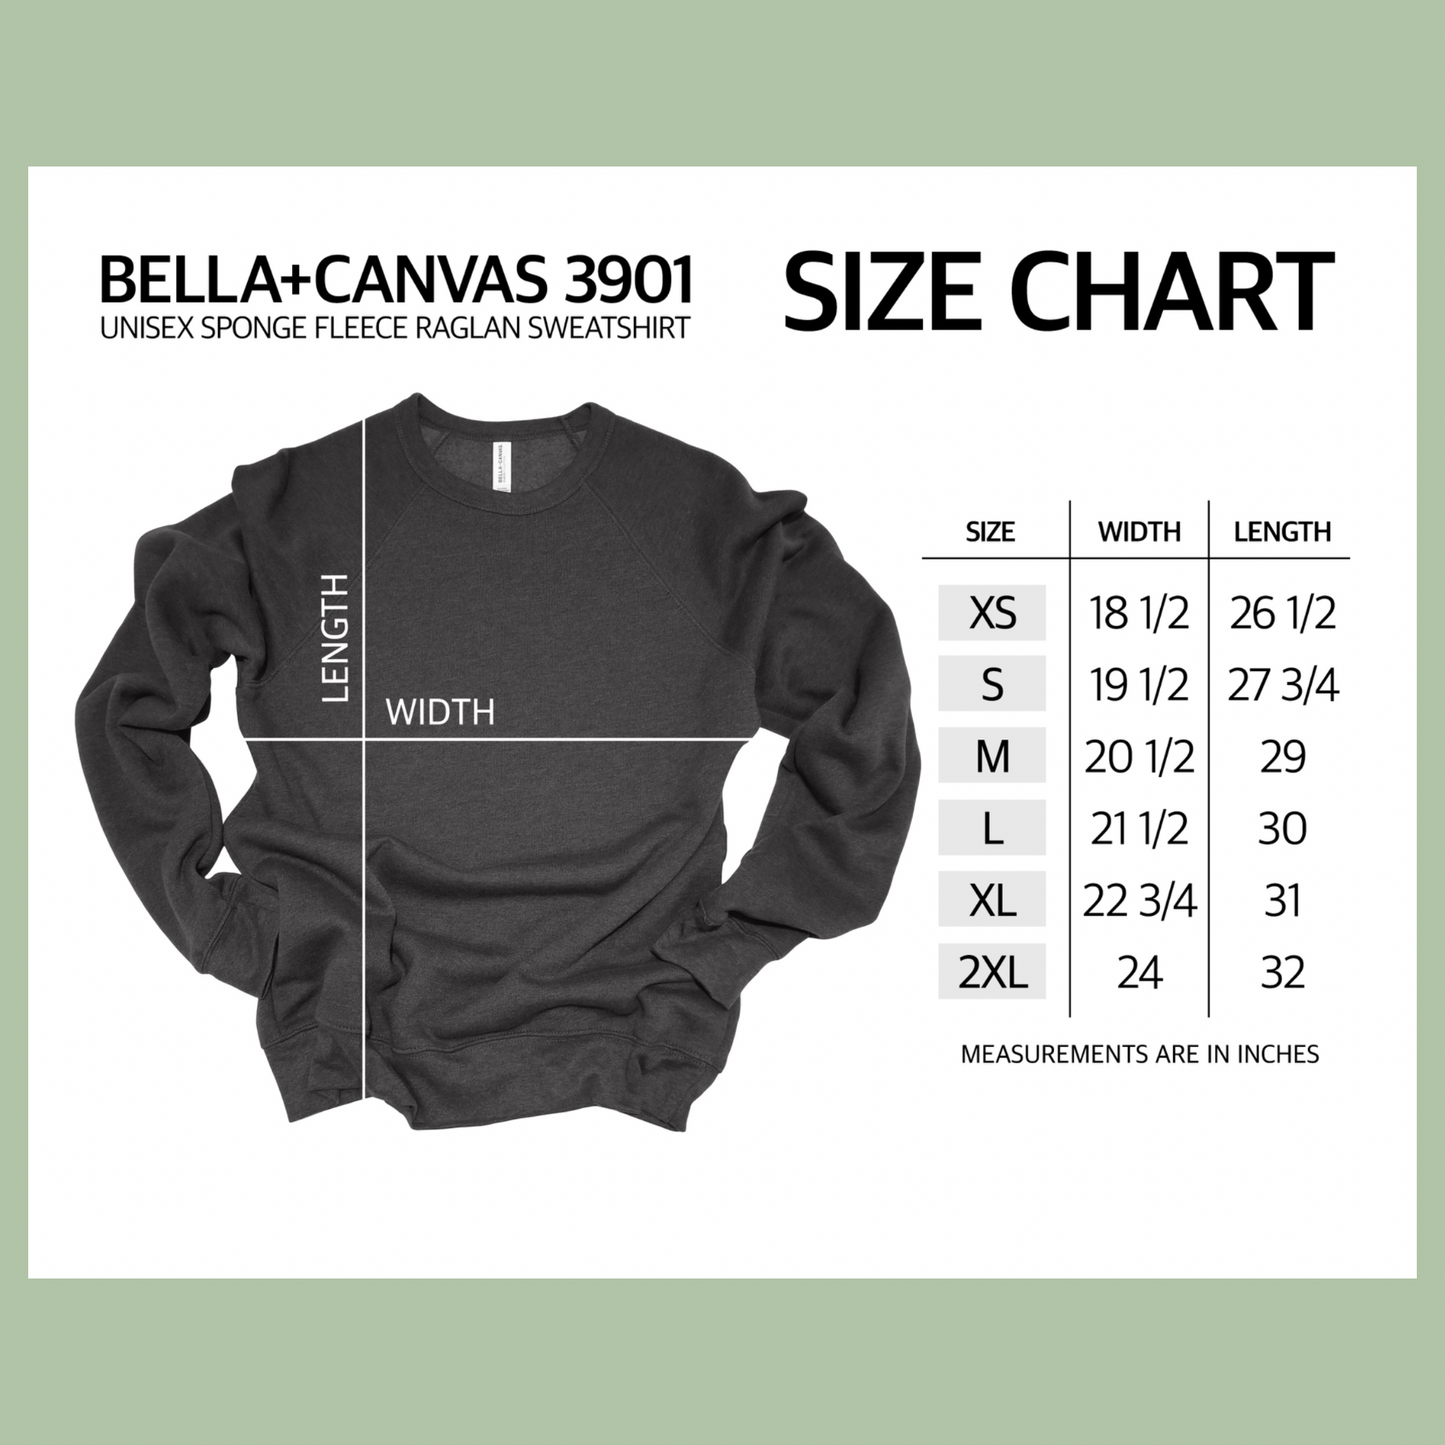 Gumbo Weather Sweatshirt- Bella Canvas 3901- Louisiana Sweatshirt- Cold Weather Shirt- Thanksgiving Shirt- Gift for Her- Sweater Weather